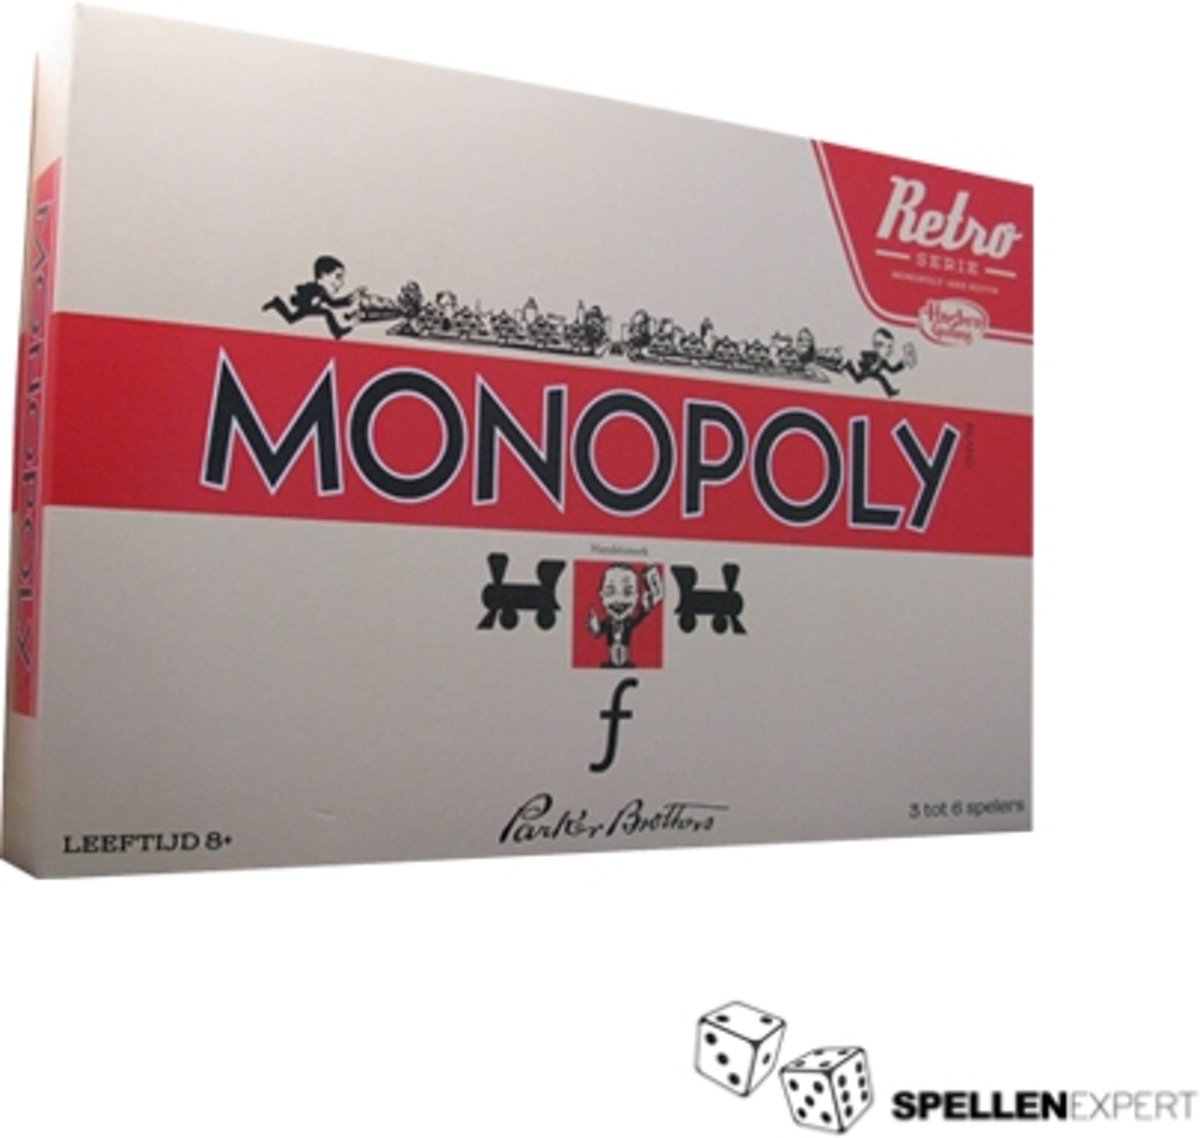 Monopoly Retro edition